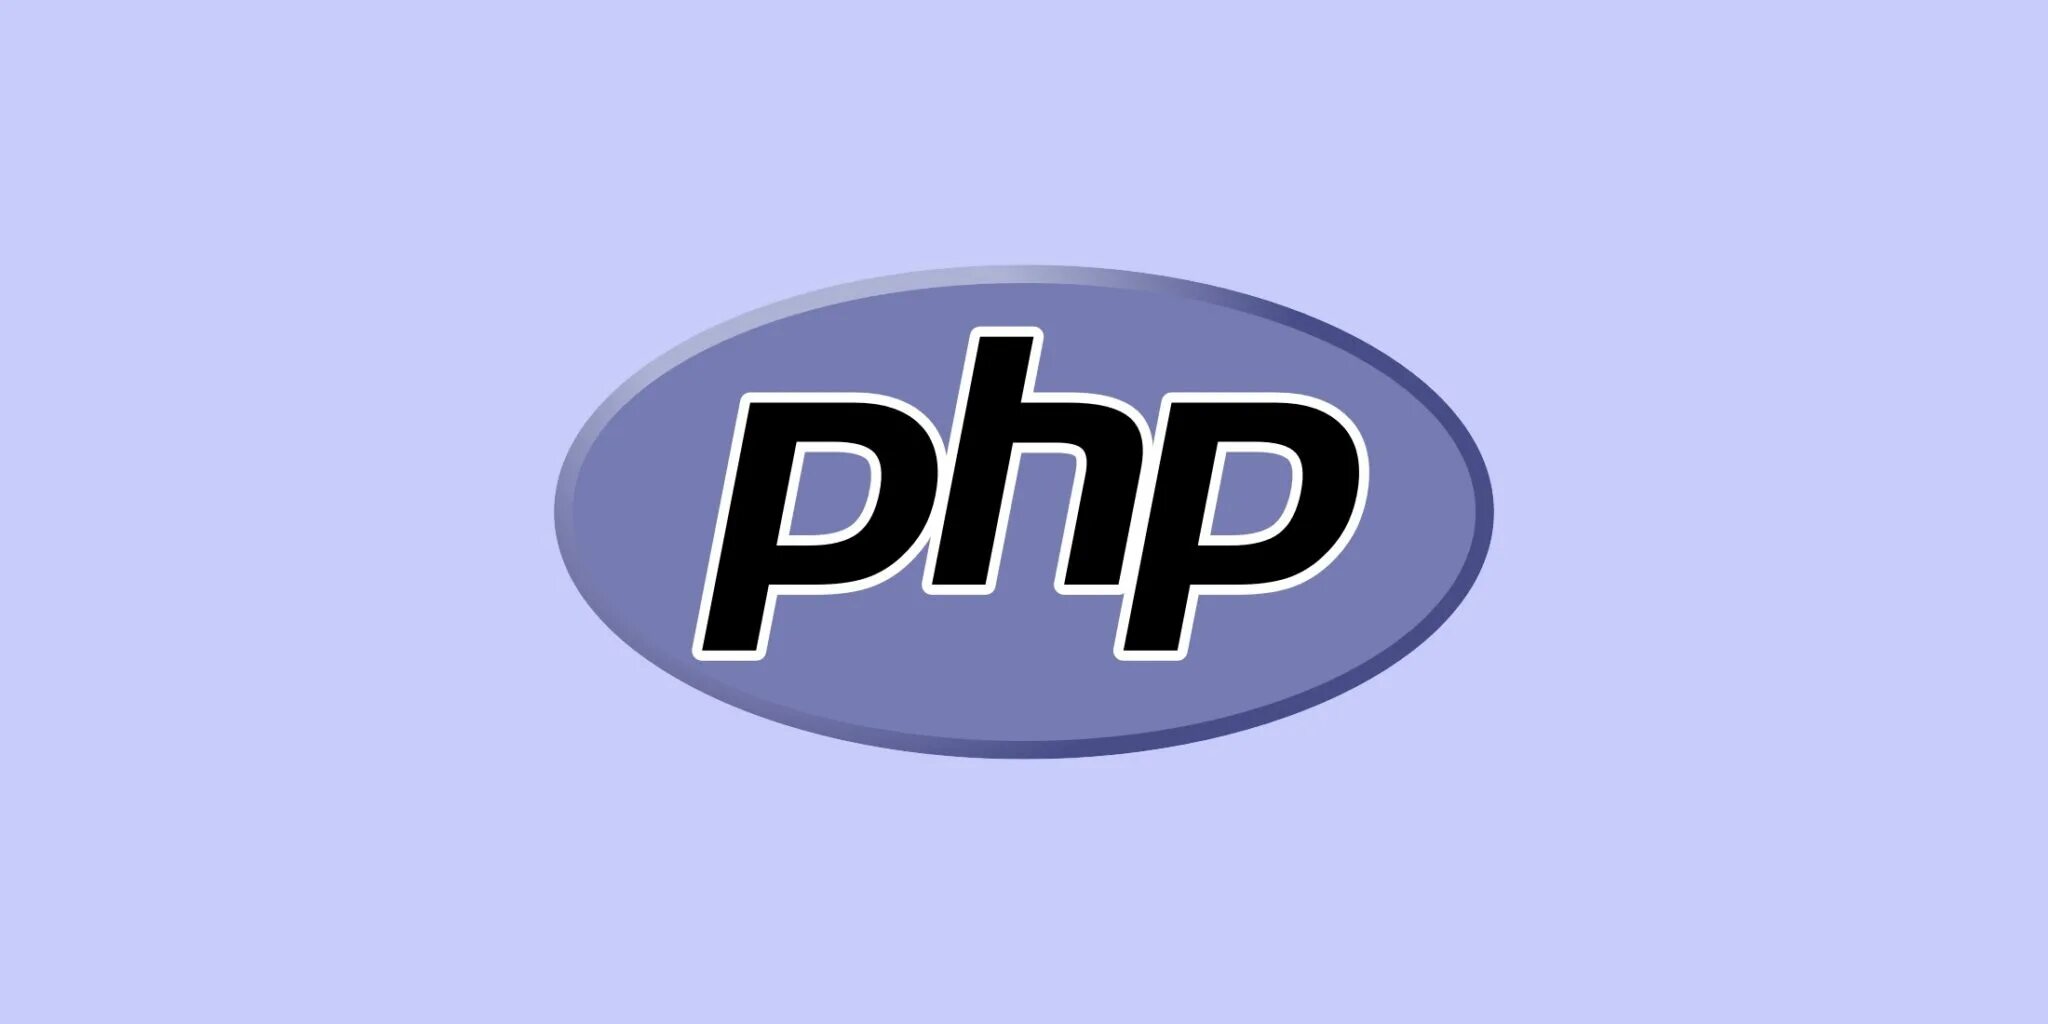 Php логотип. Значок php. Php язык программирования. Php фото. Php new com